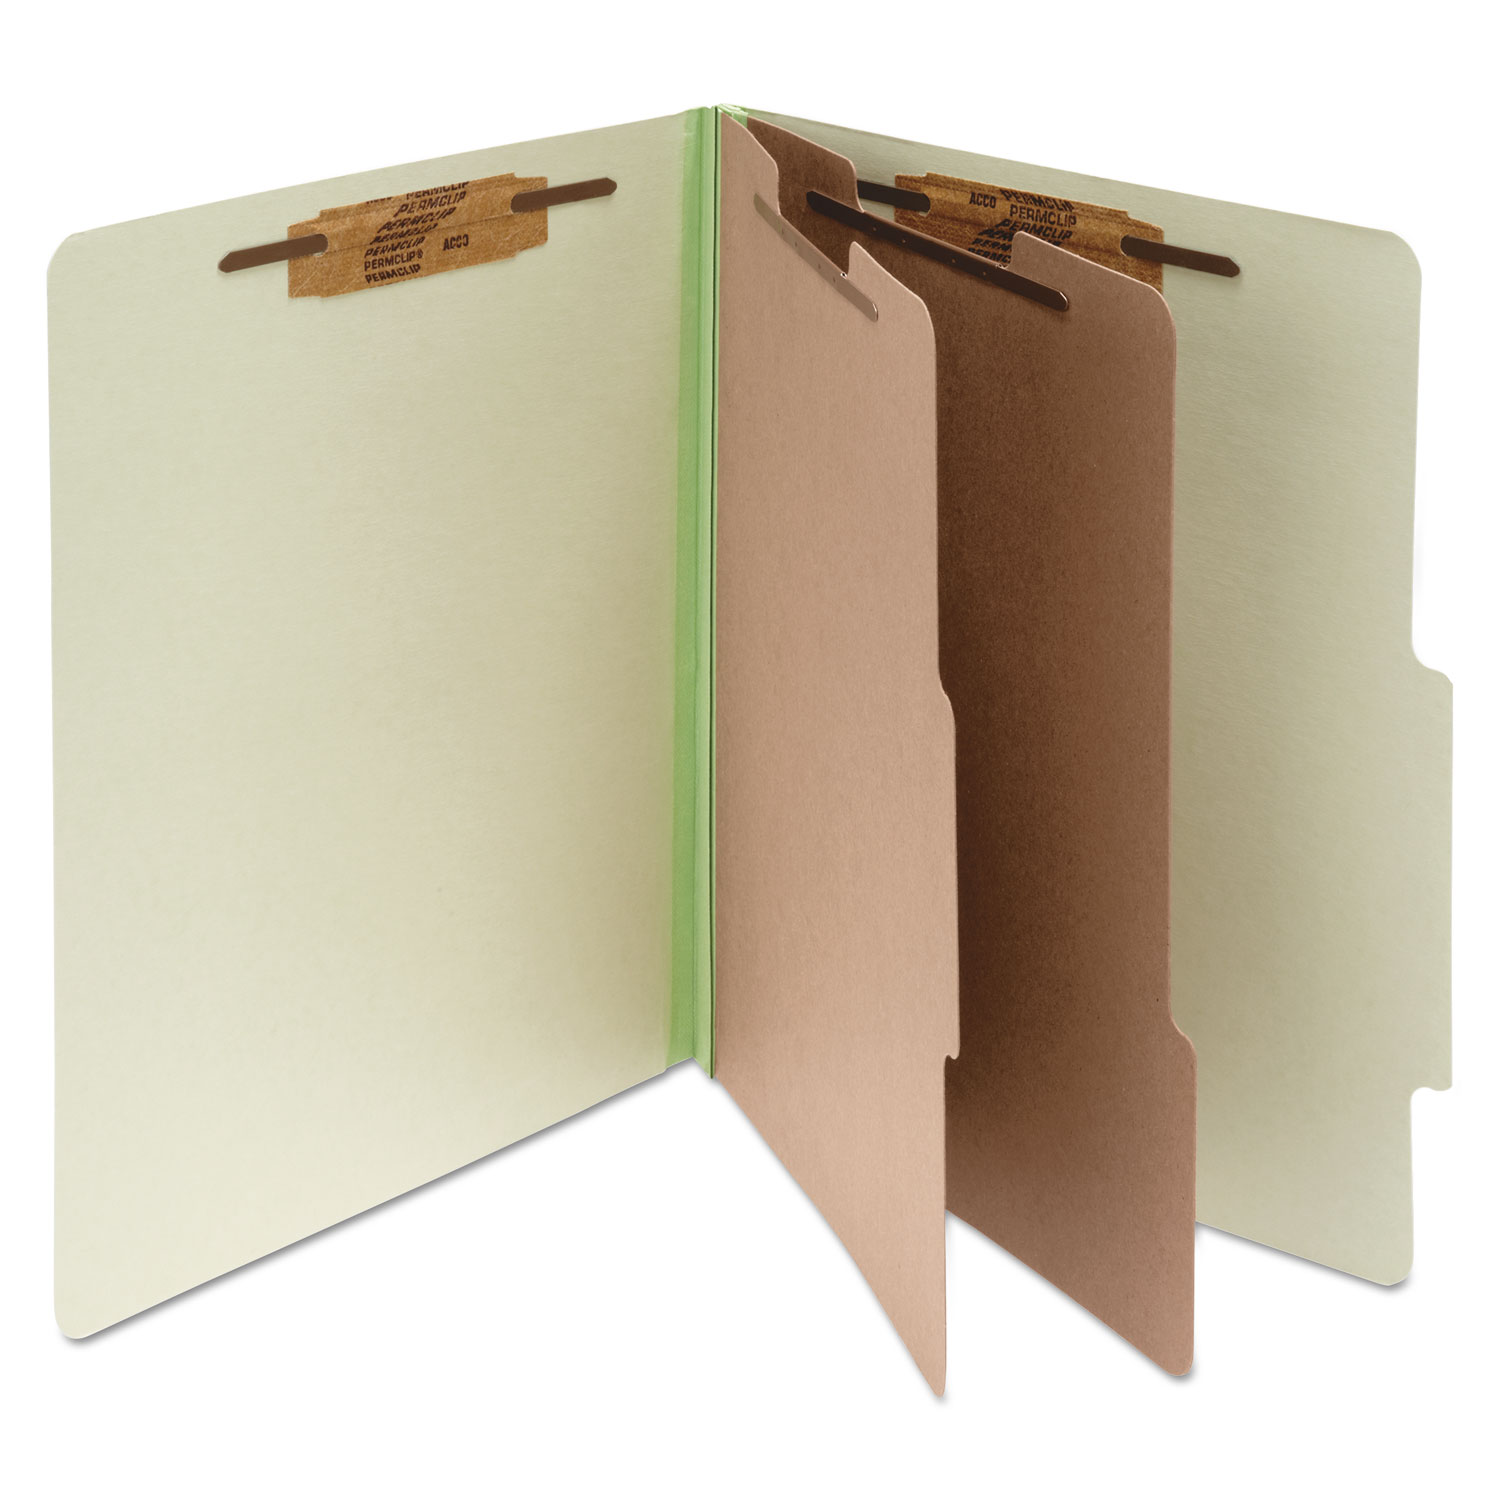  ACCO A7015046 Pressboard Classification Folders, 2 Dividers, Letter Size, Leaf Green, 10/Box (ACC15046) 